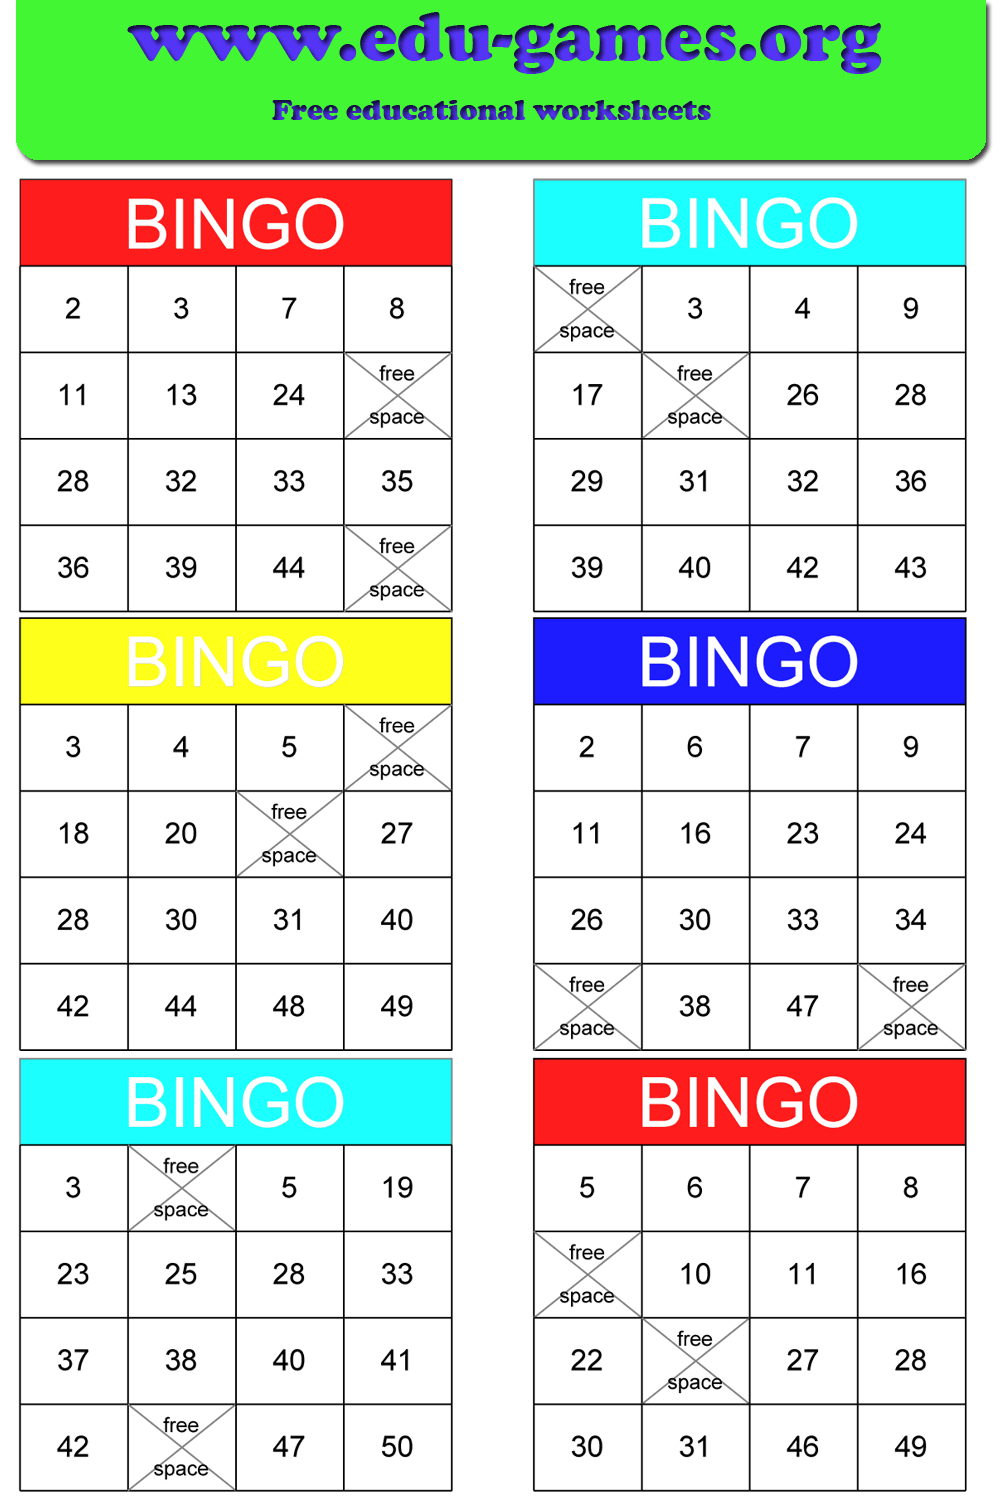 Free Multiplication Bingo Printable